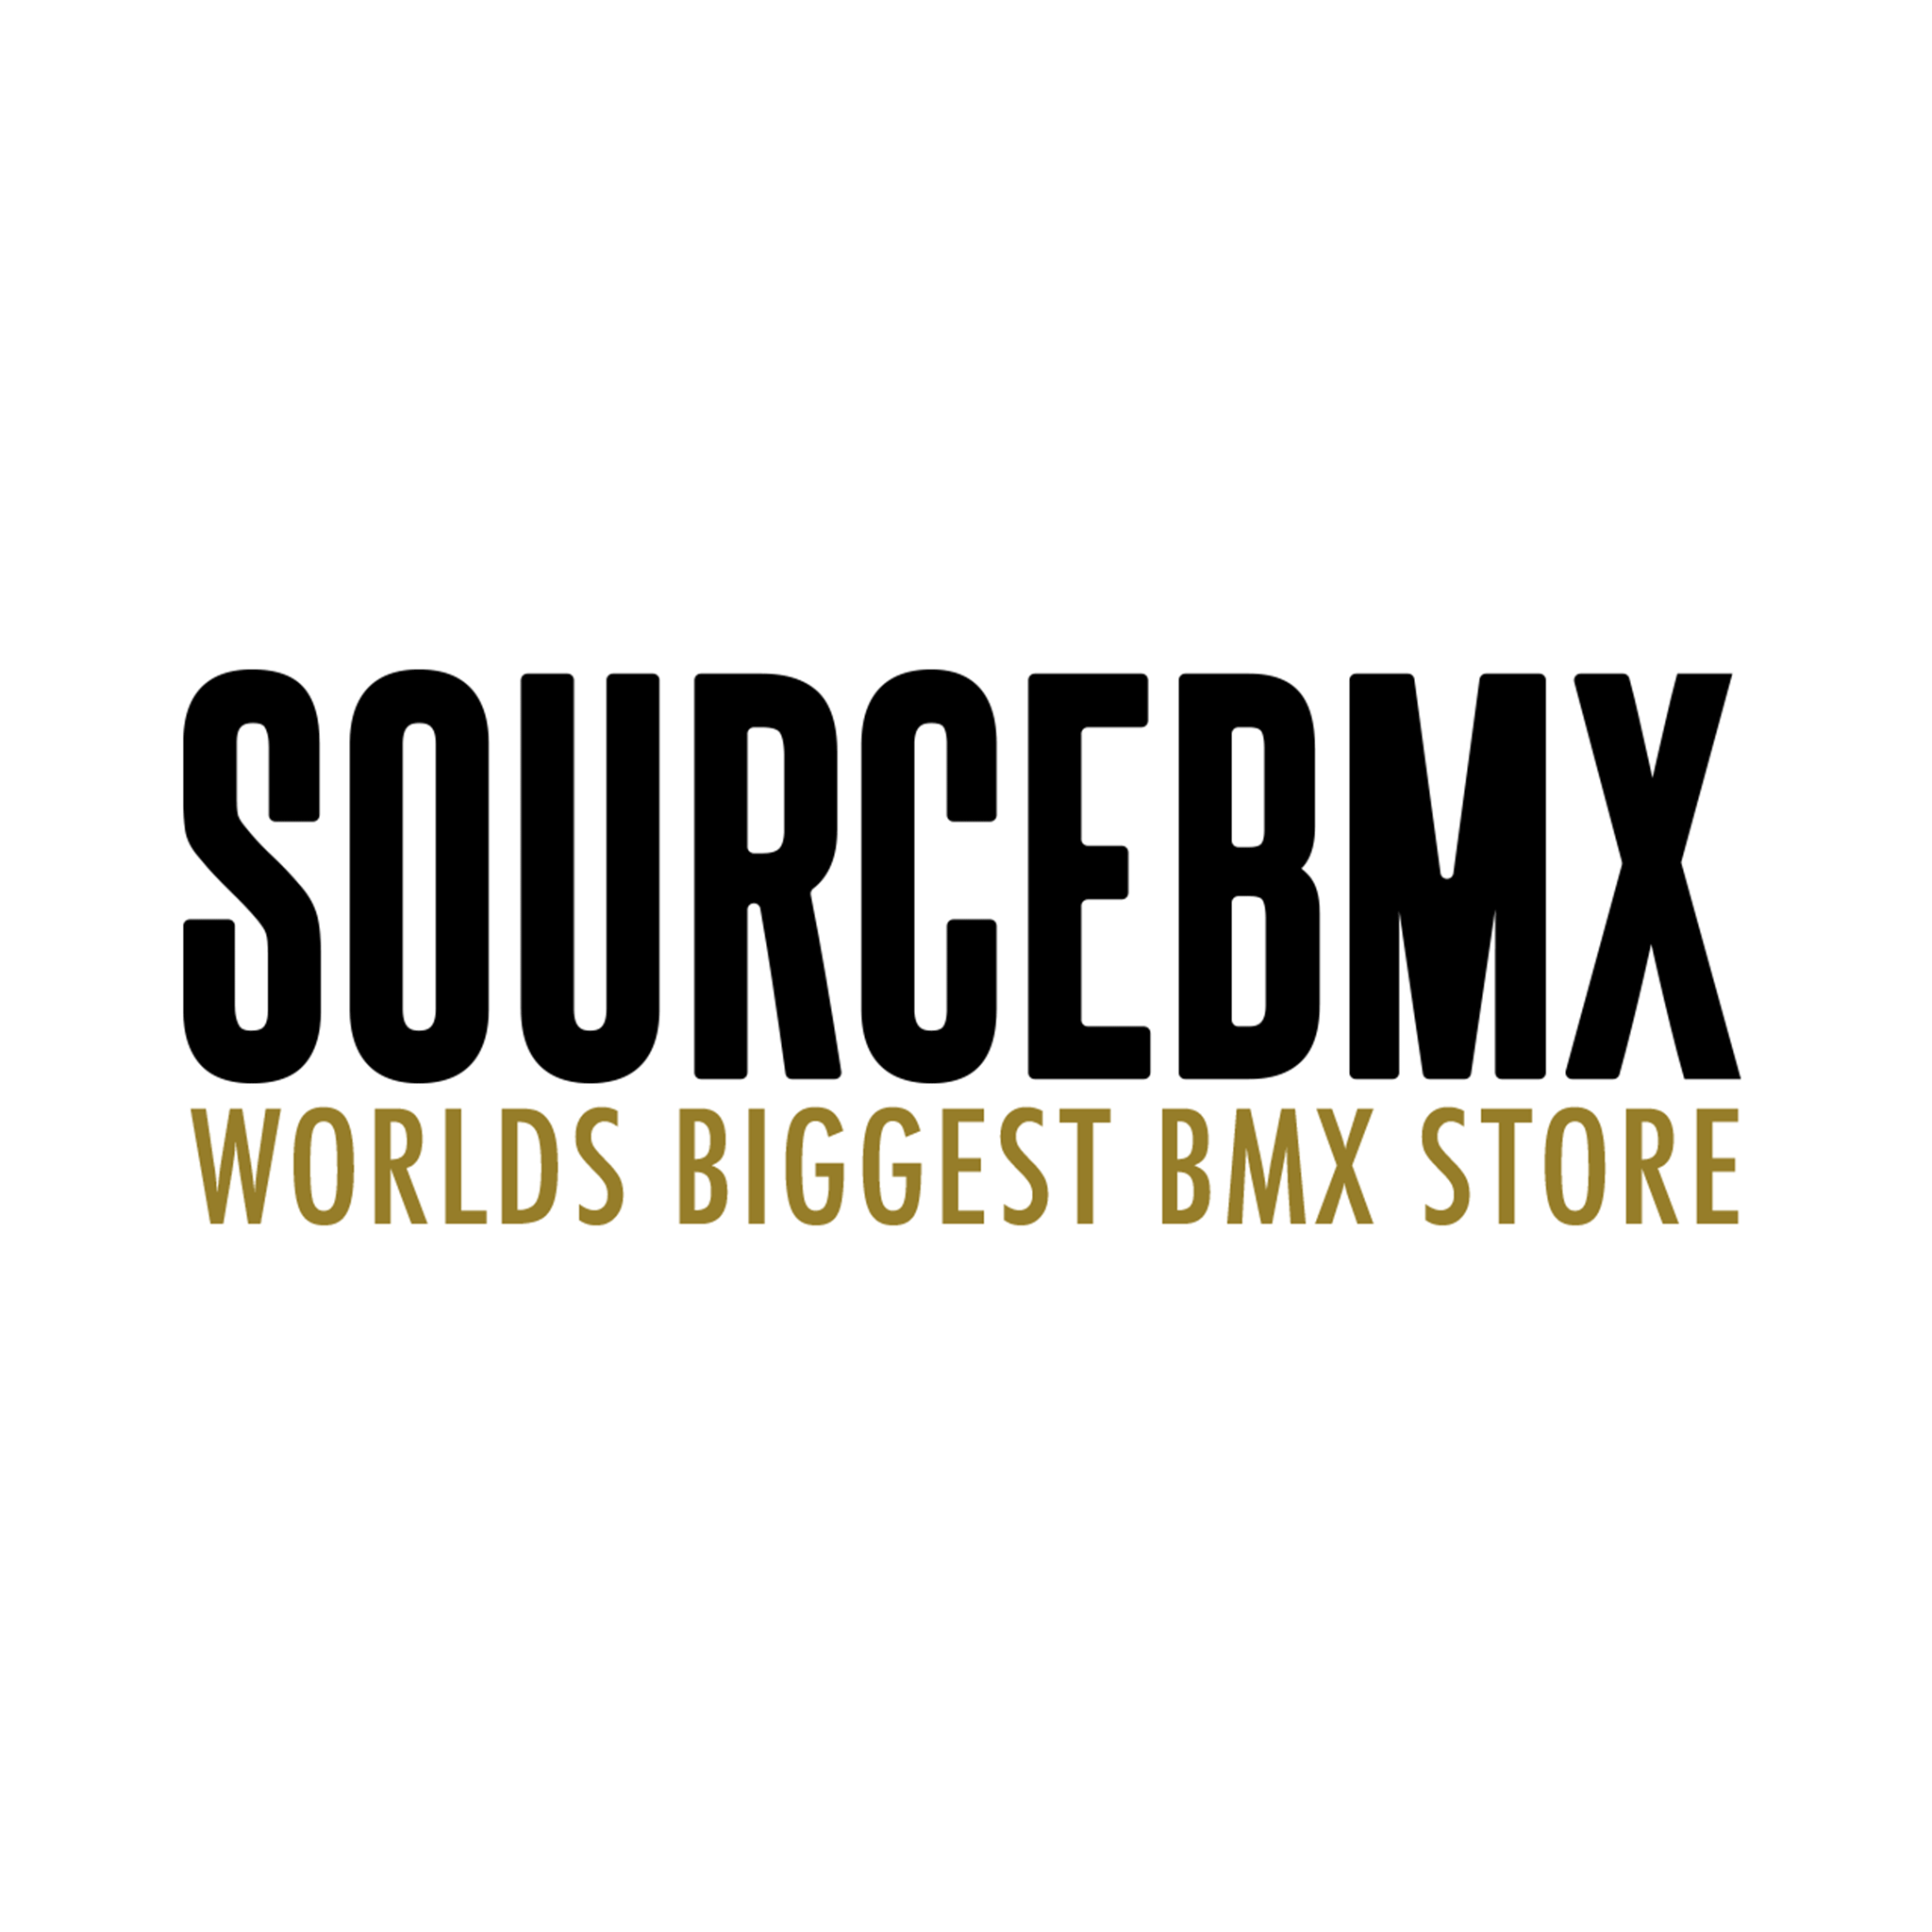 Coupon codes SourceBMX